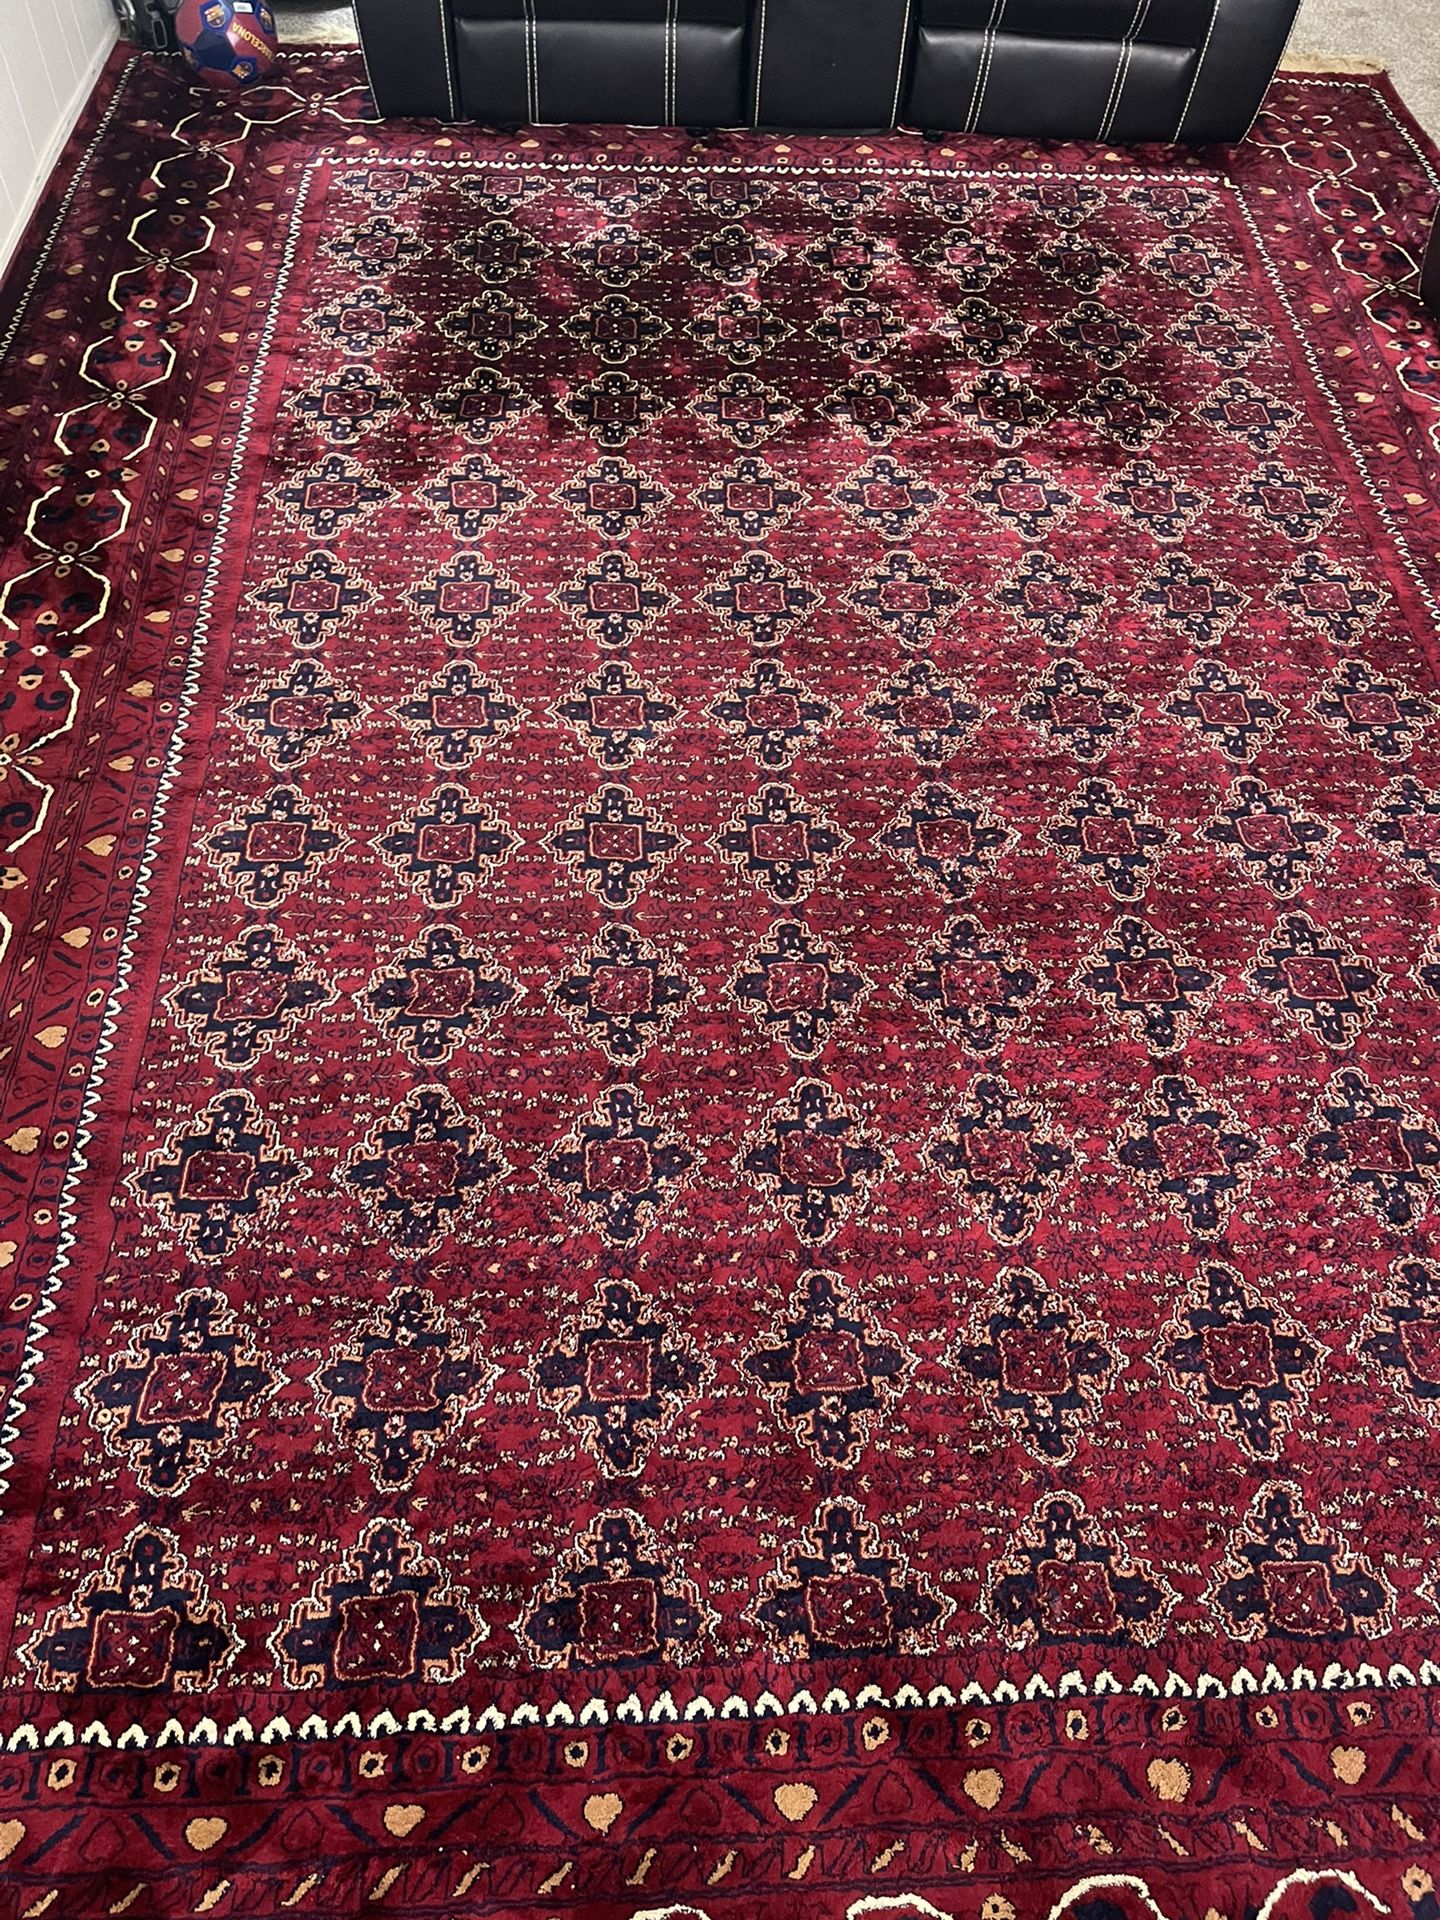 Turkey Carpet